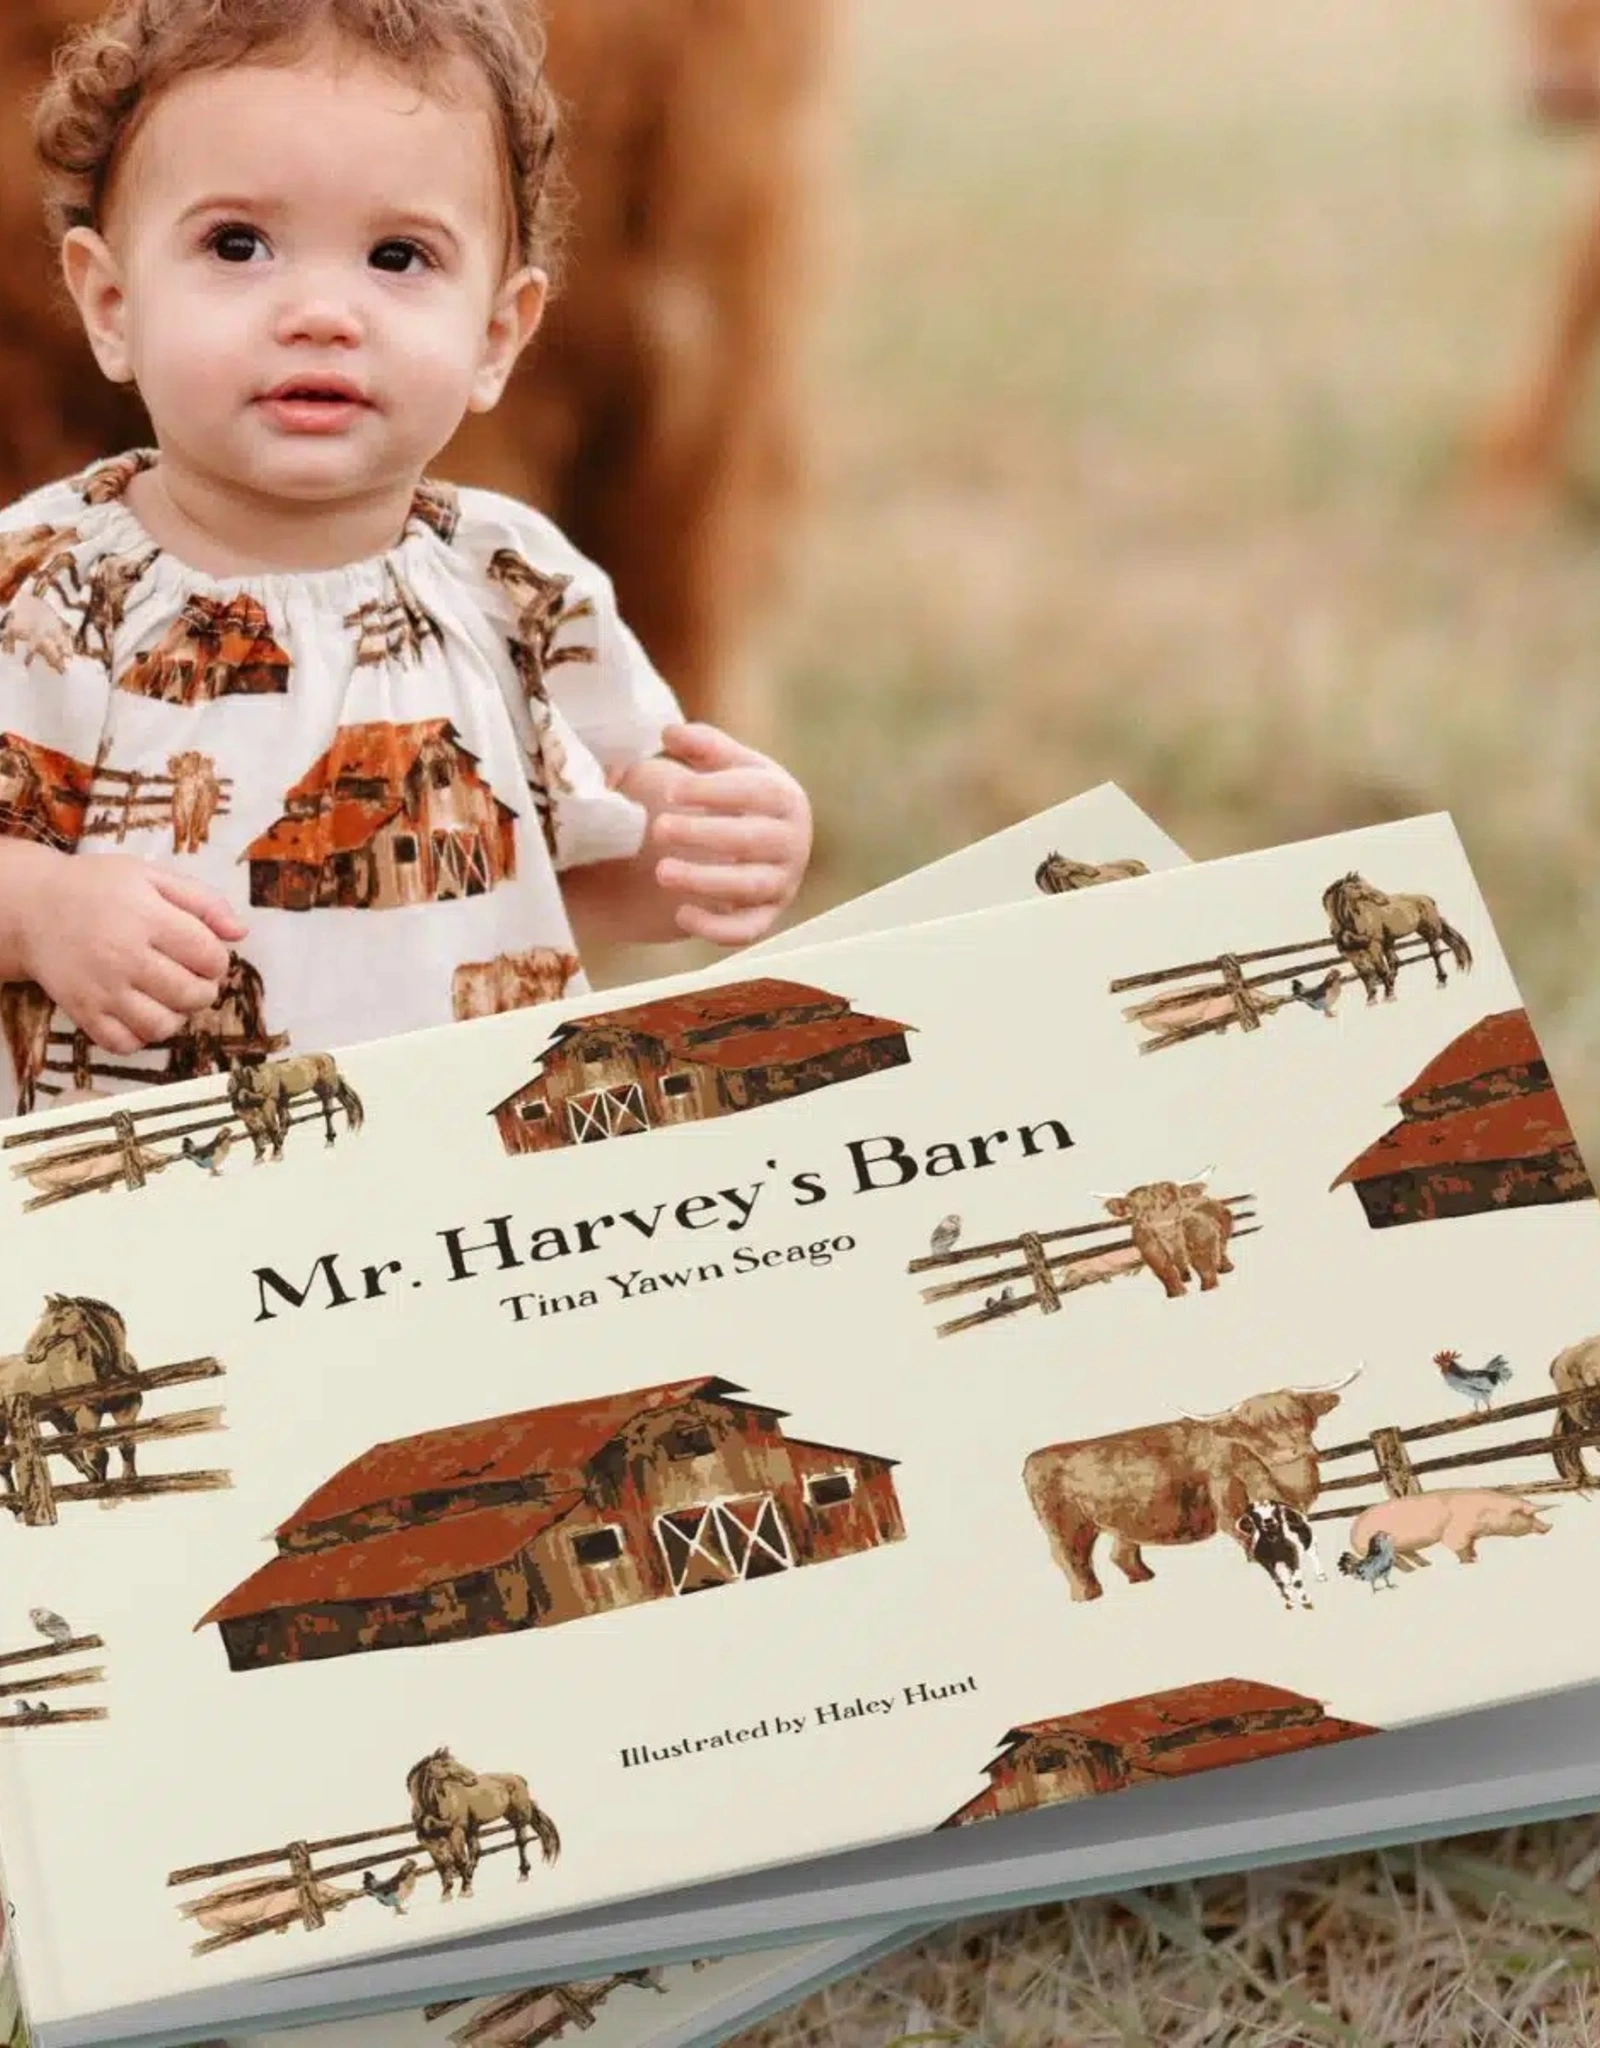 Milkbarn Mr. Harvey's Barn Book